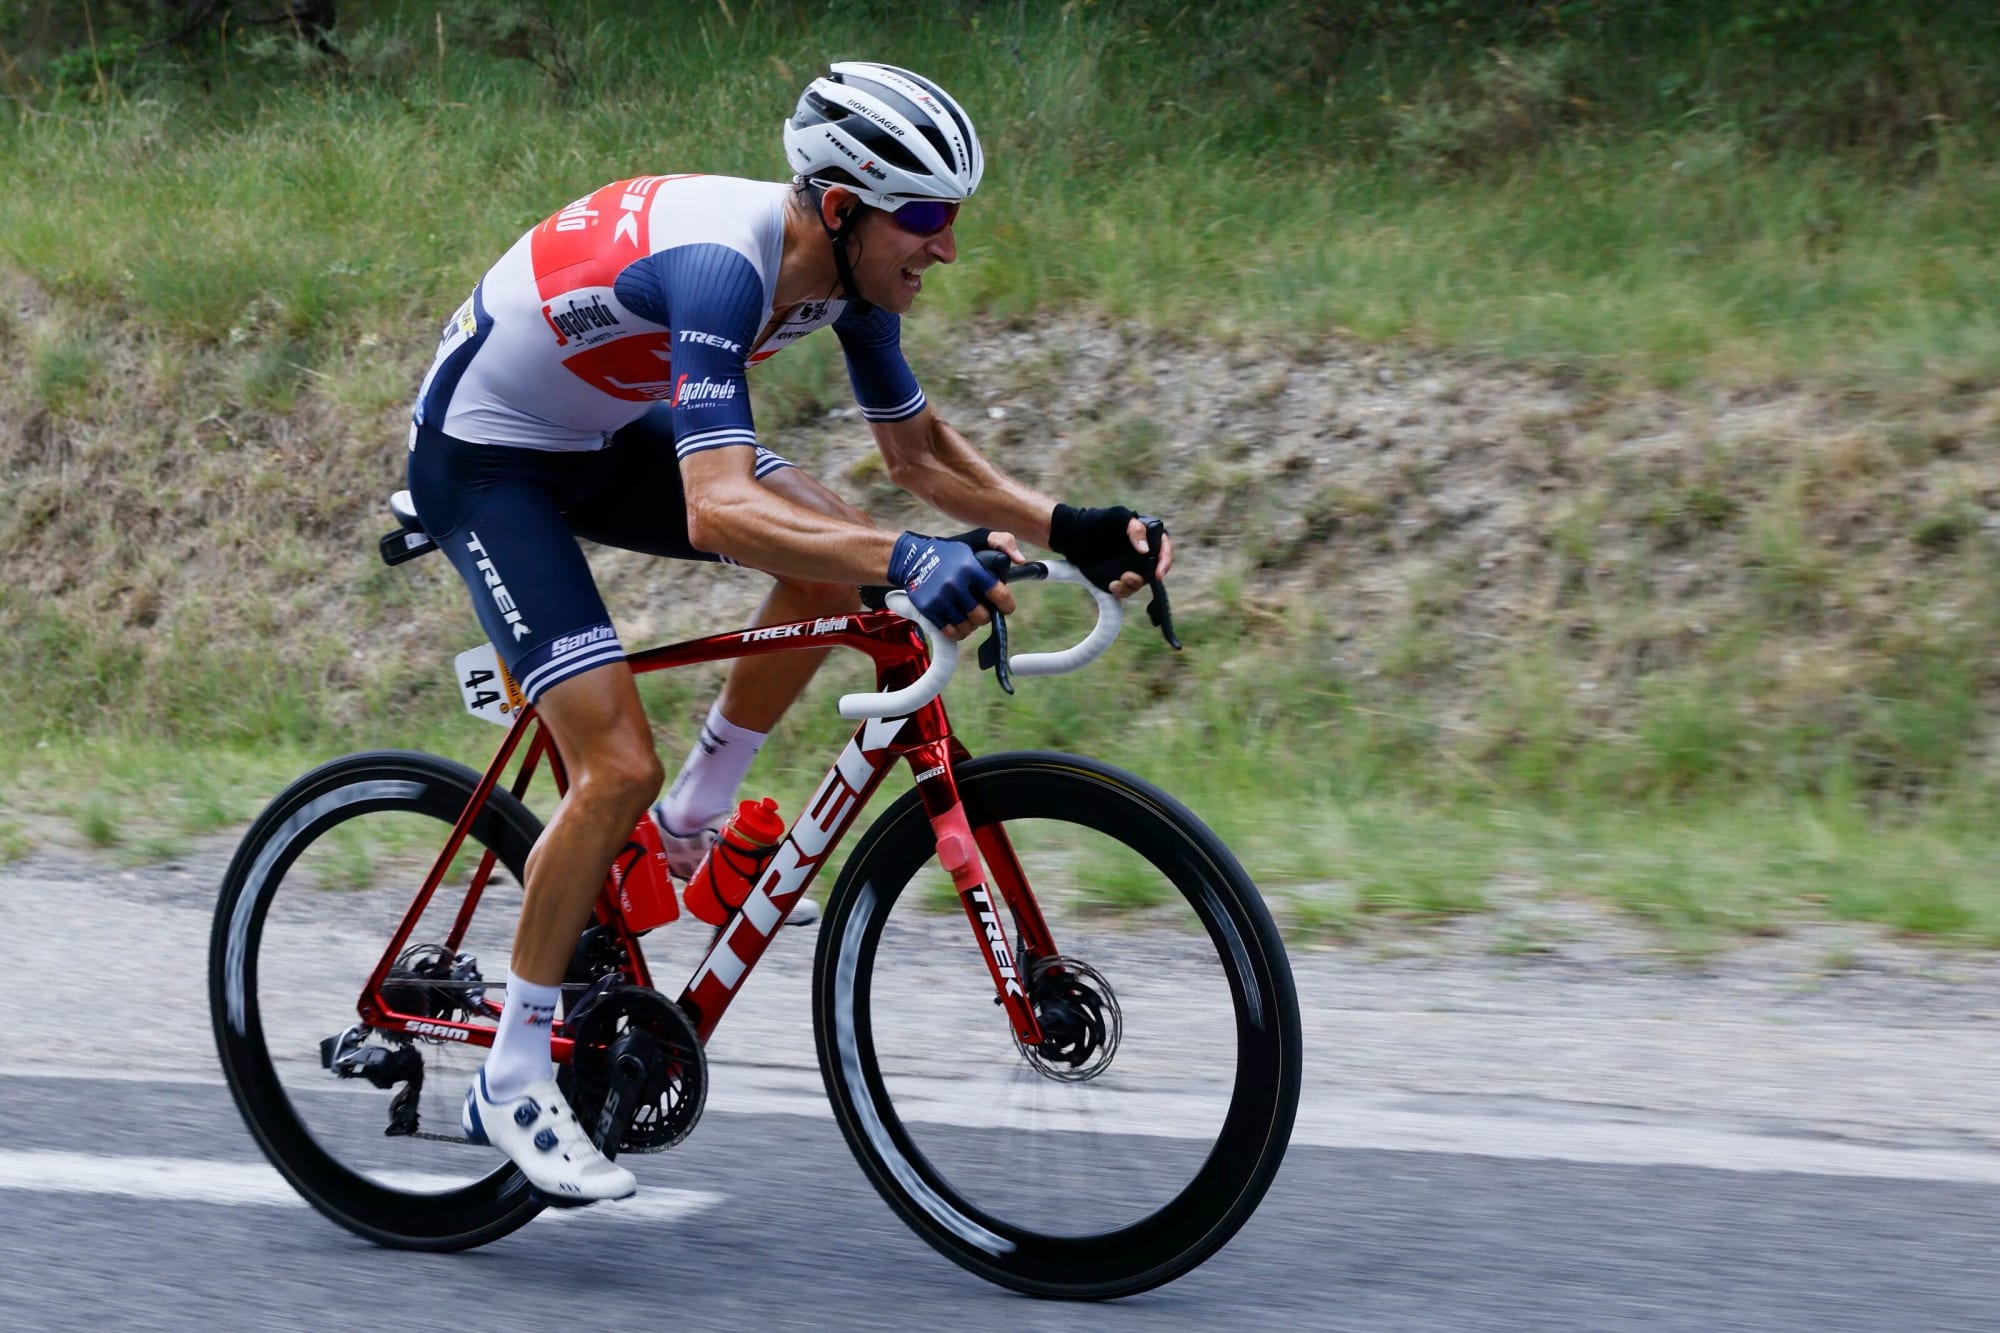 Tour de France standings after Bauke Mollema wins Stage 14